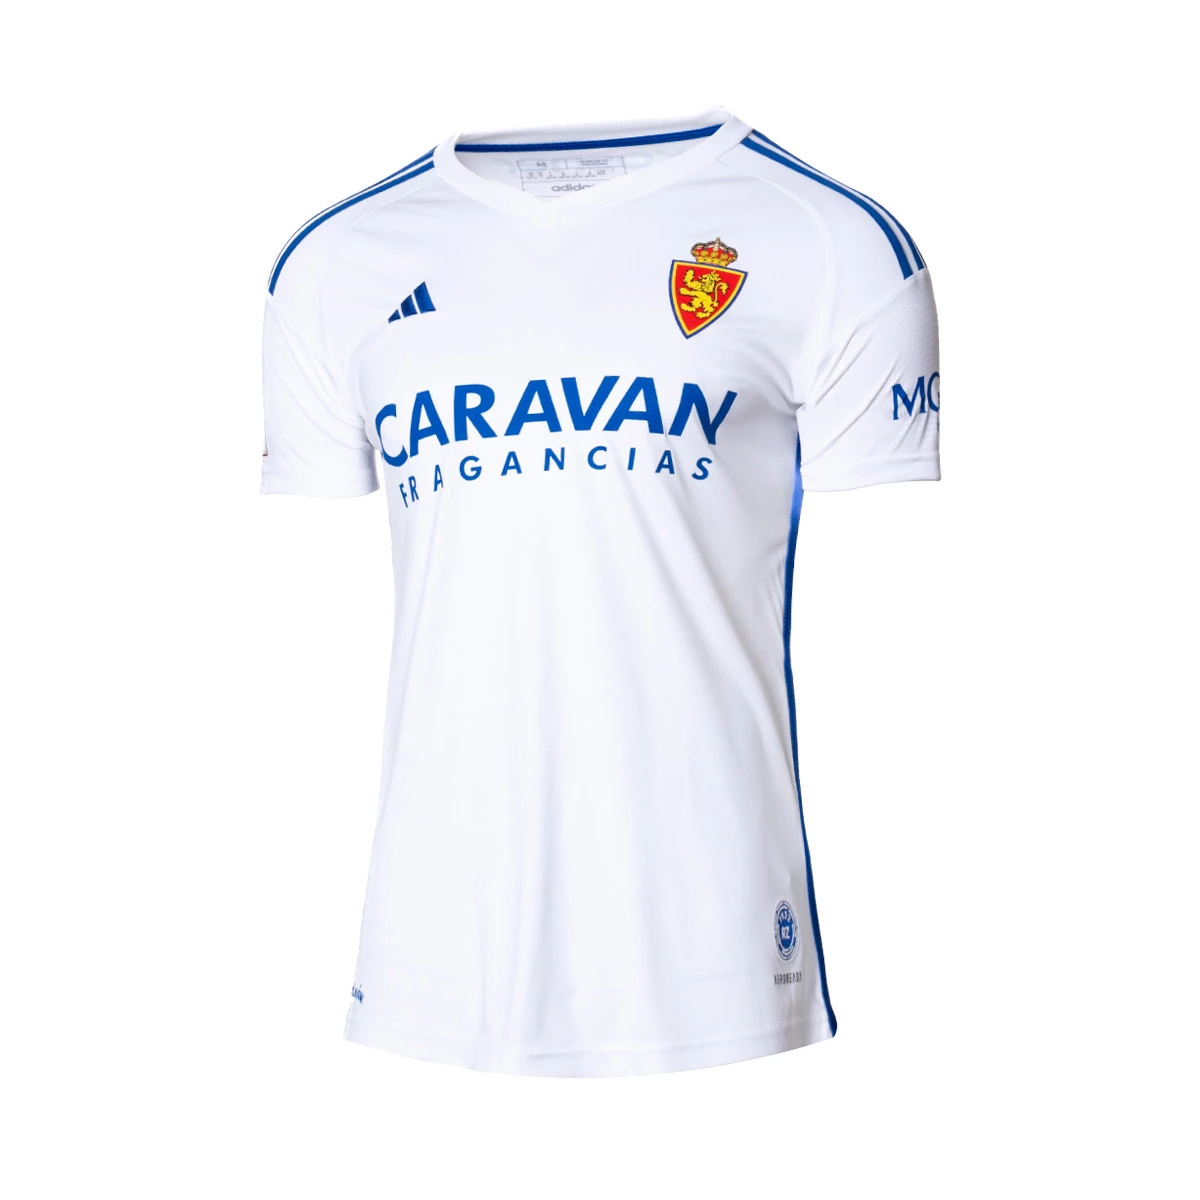 New balance Camiseta Athletic Club Bilbao On-Pitch 20/21 Azul